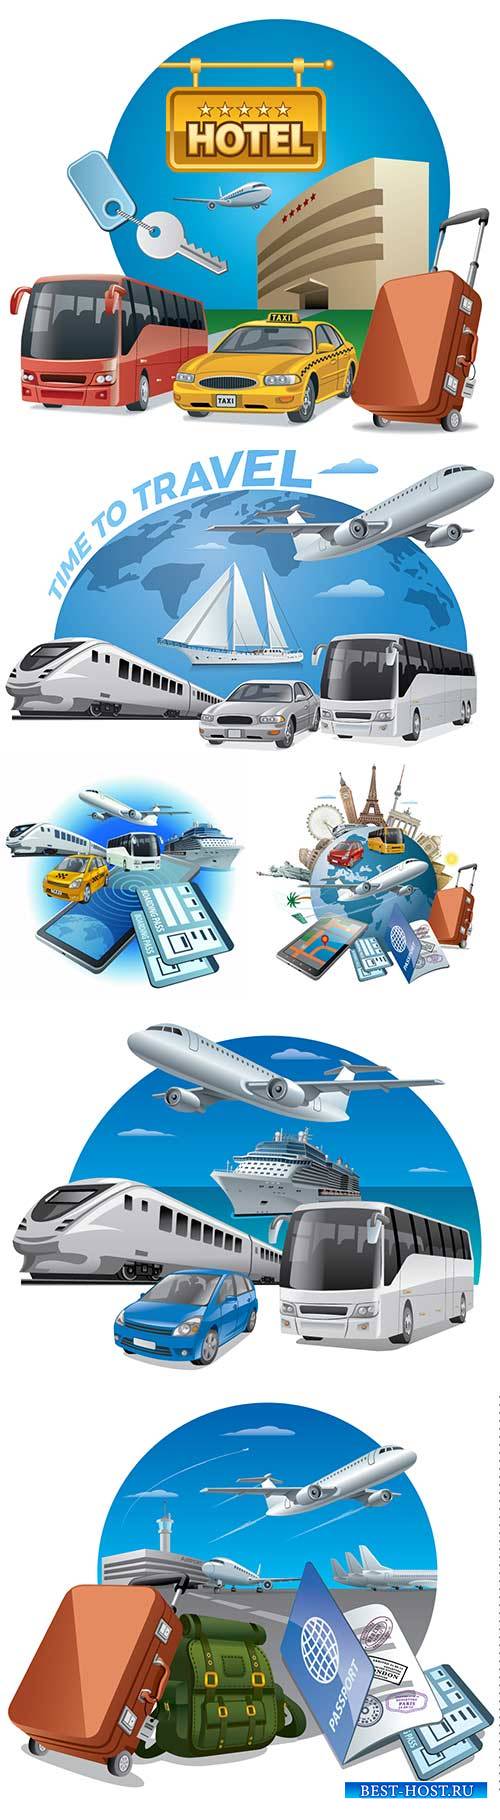 Transports for travel vector illustration